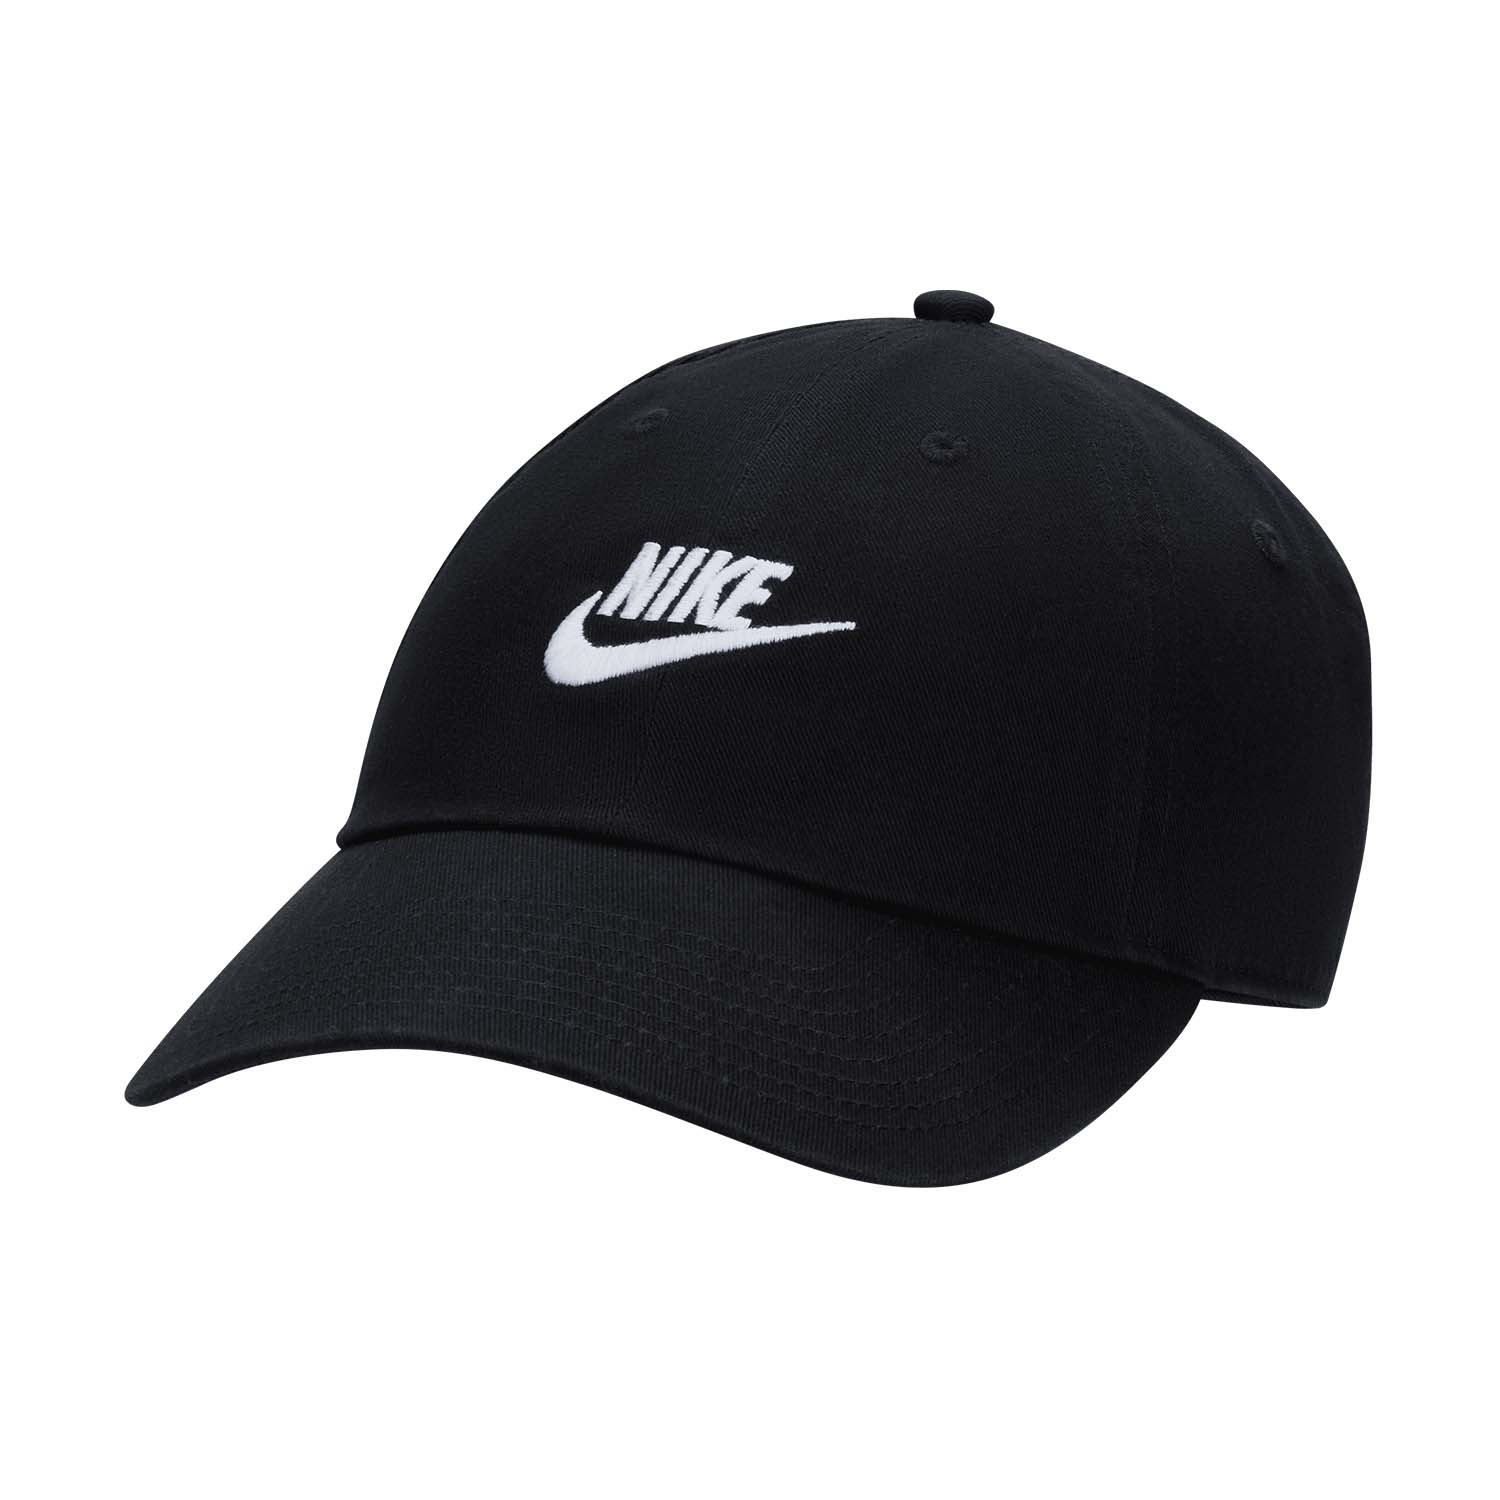 Nike Club Cap - Black/White